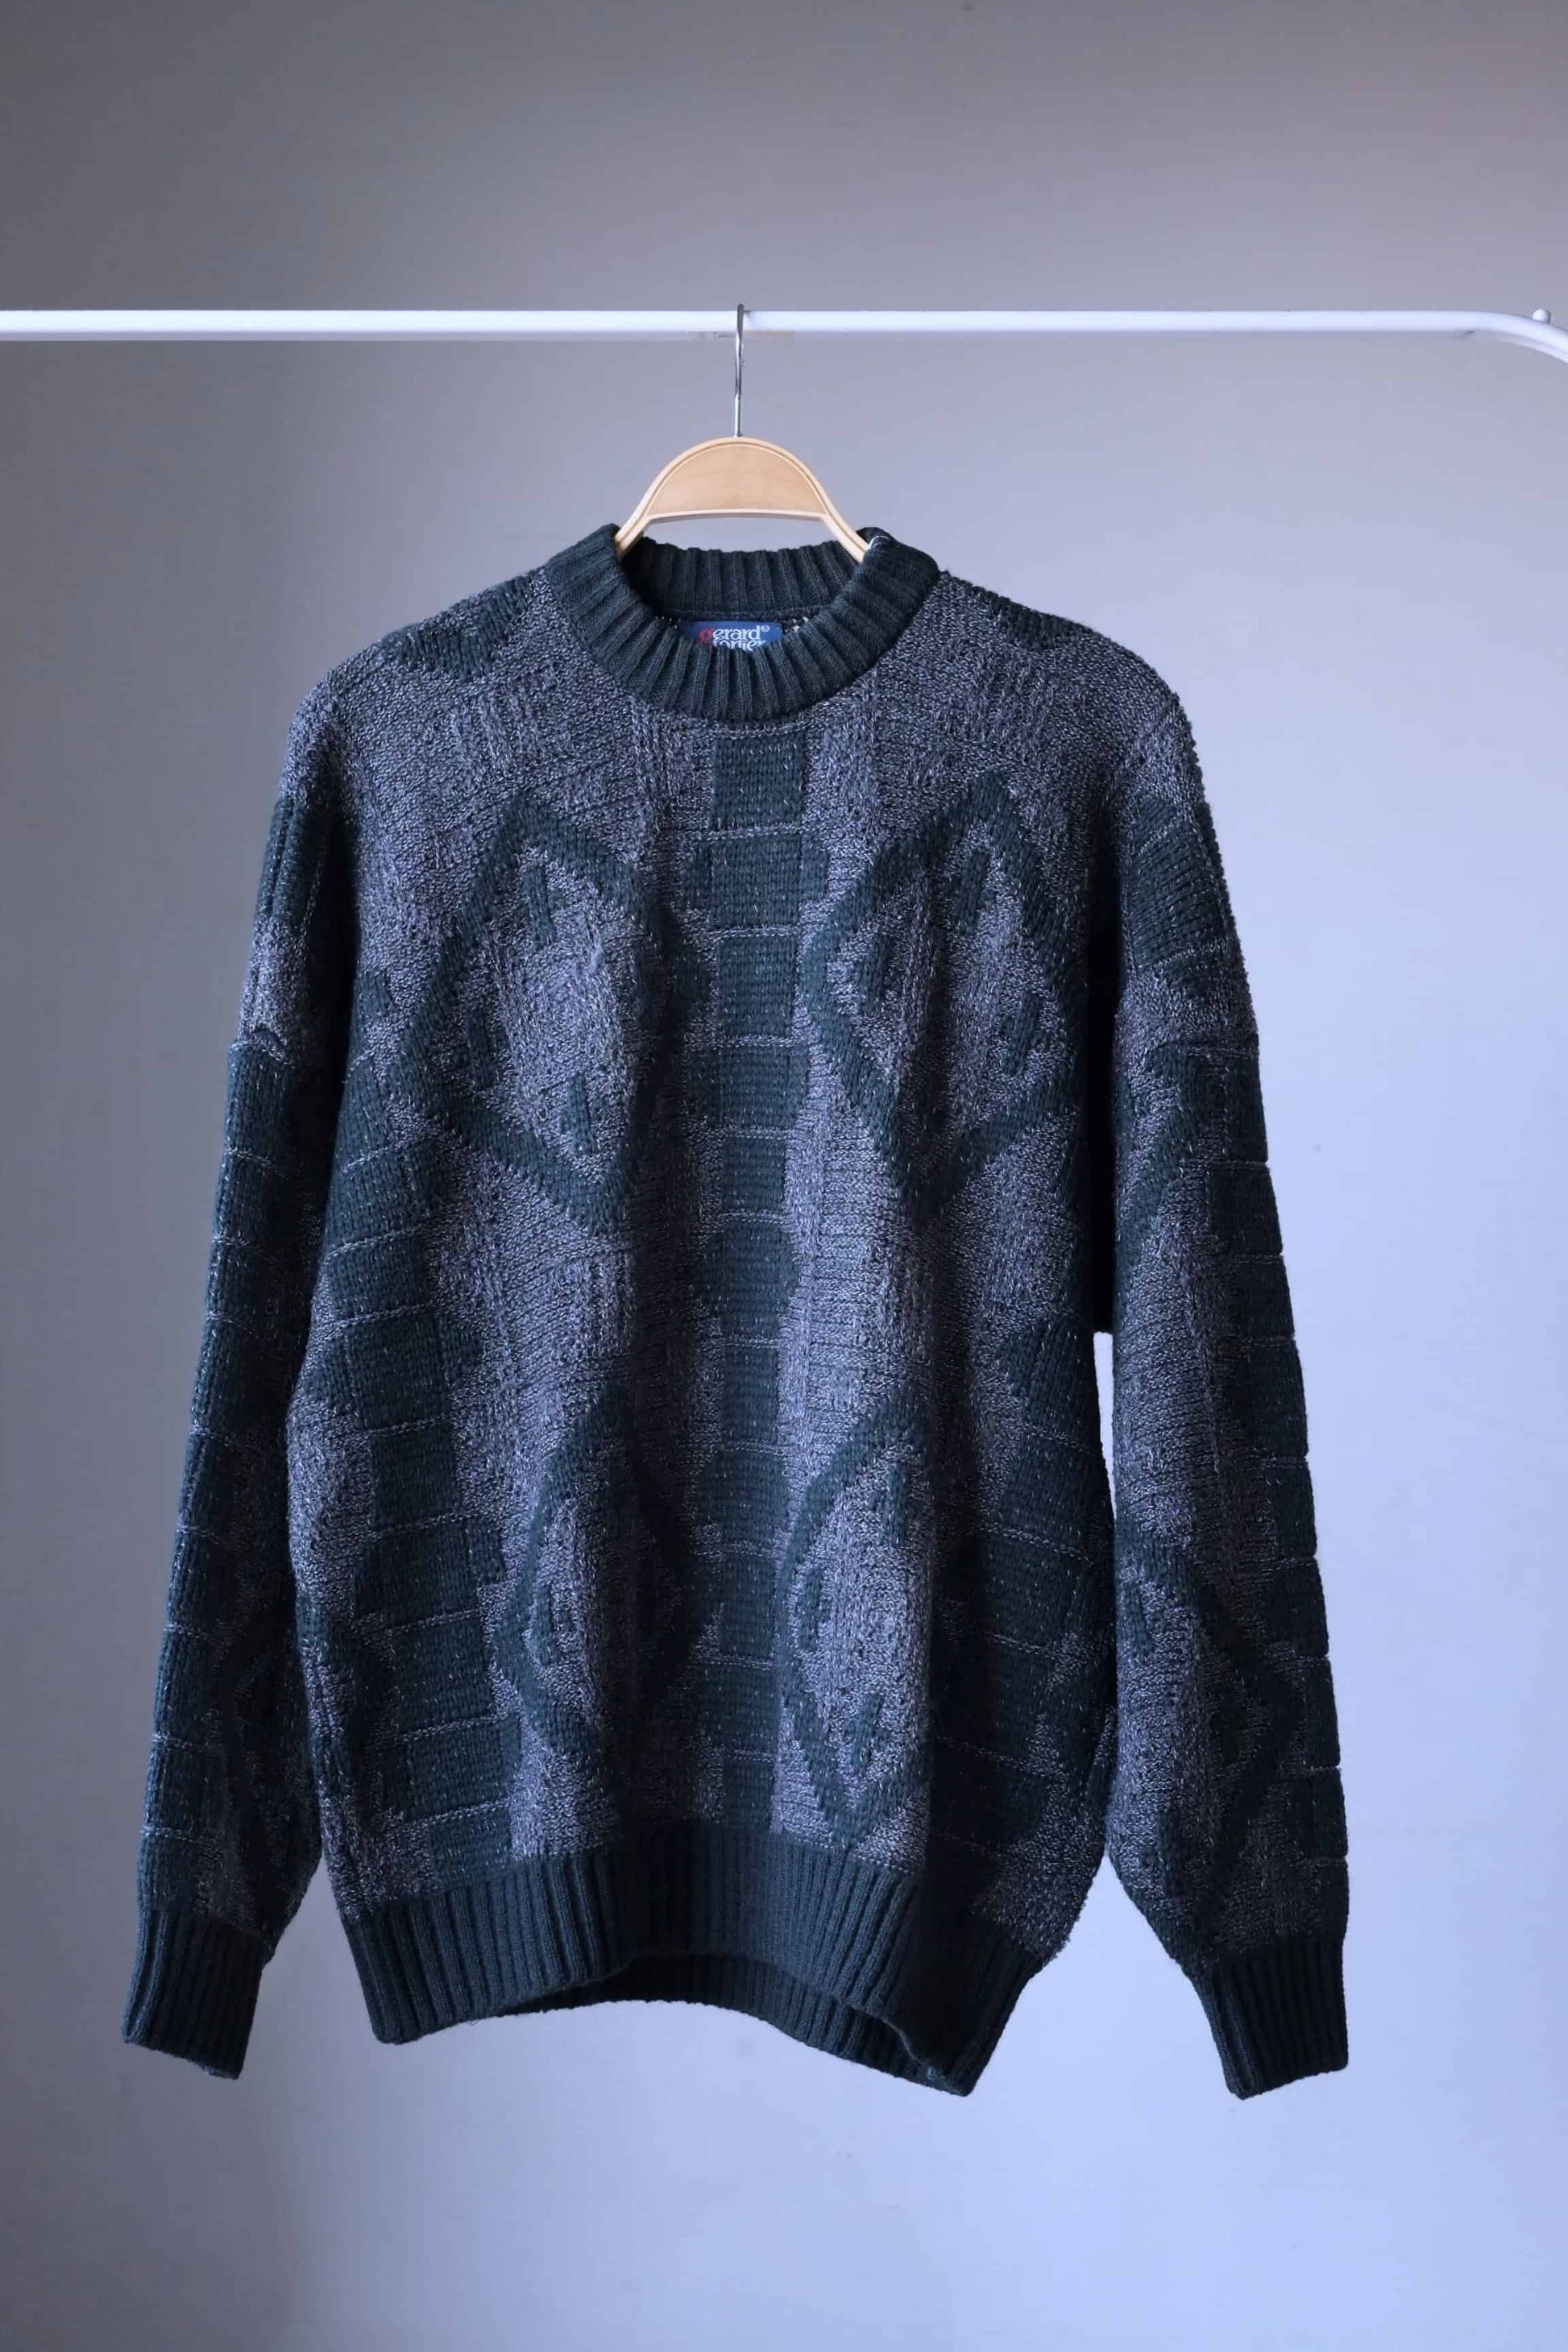 Vintage 90's Jacquard Pattern Sweater dark green grey